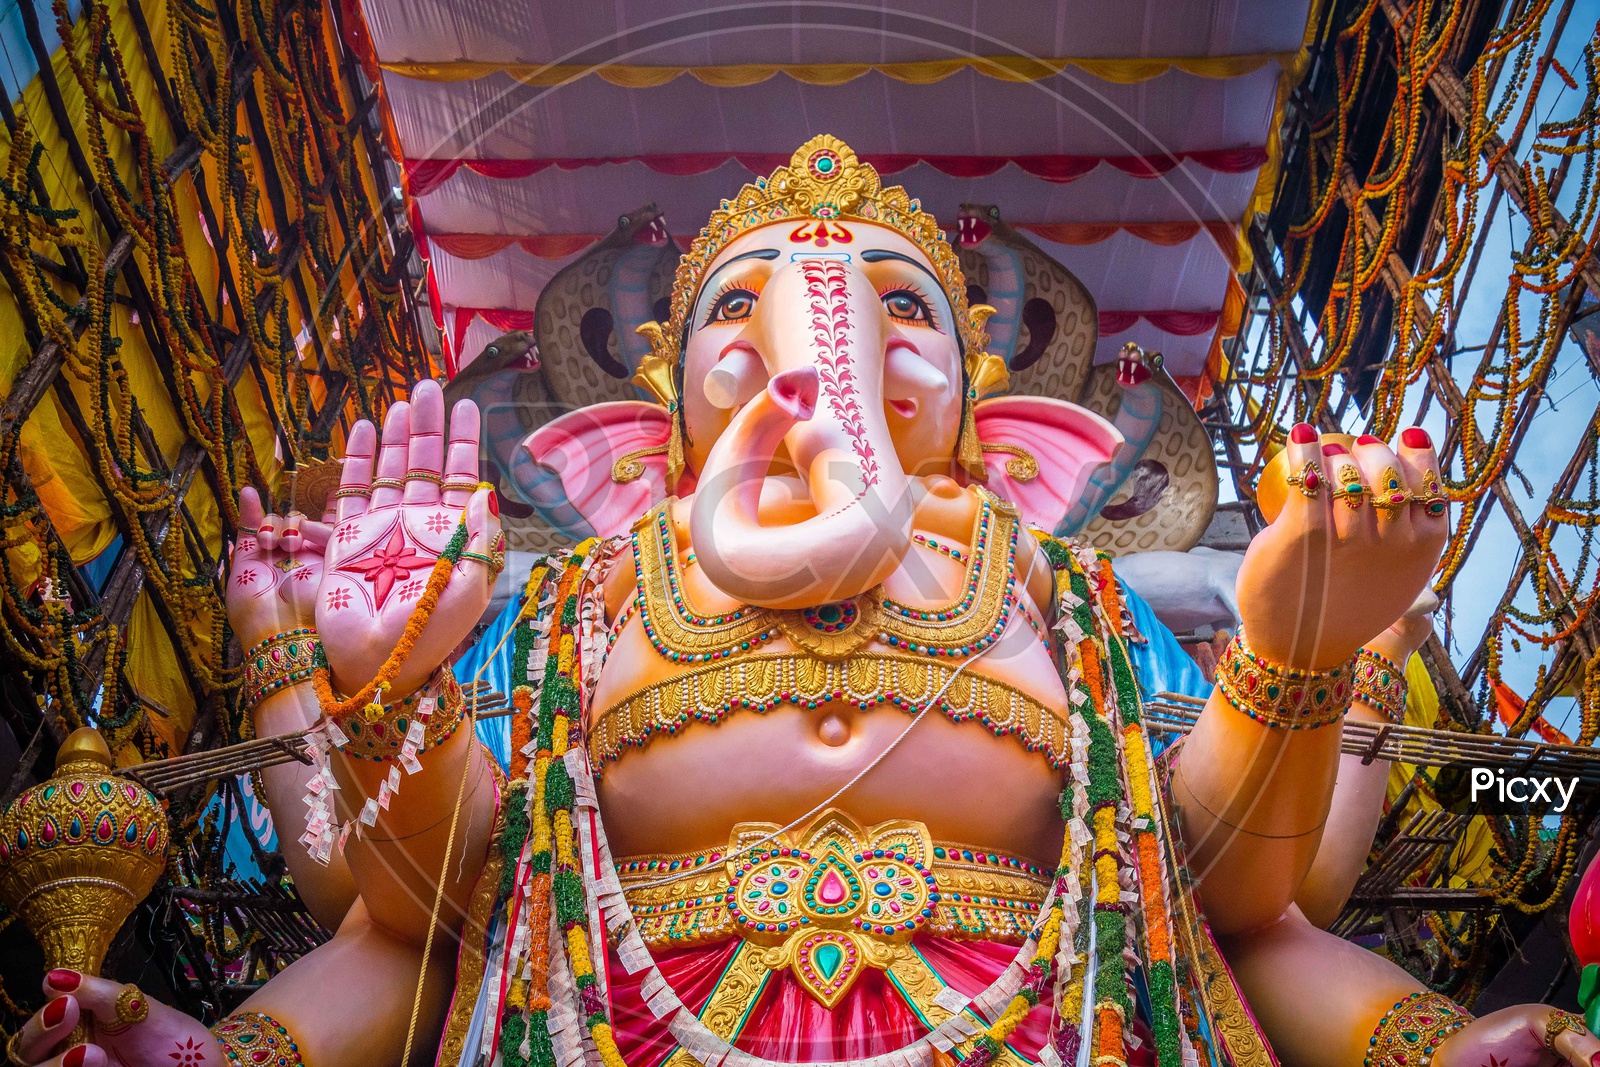 Tallest Lord Ganapathi or Ganesh idol in Khairatabad